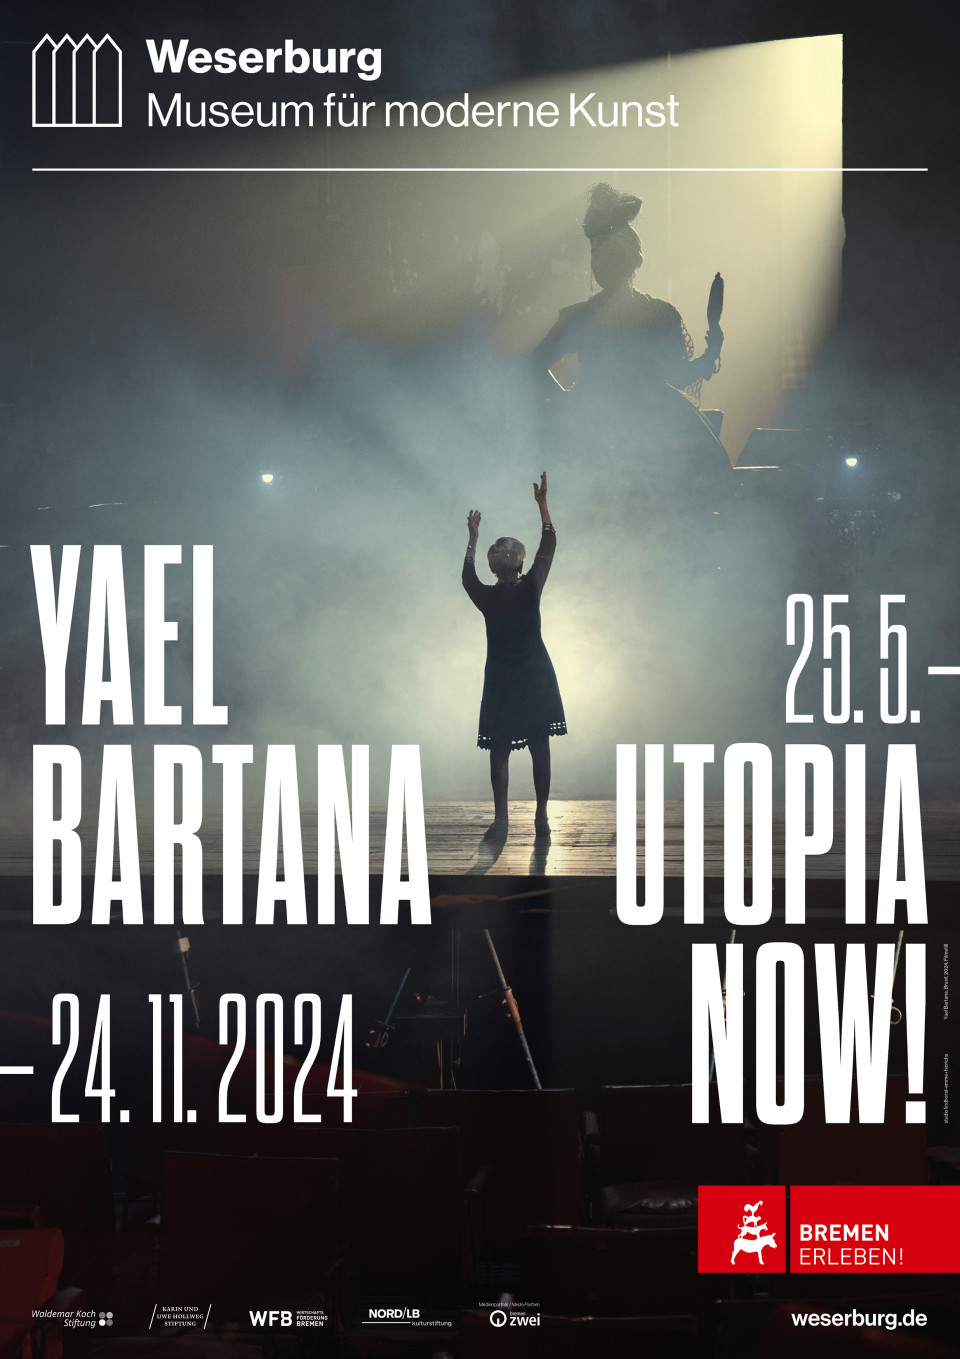 Yael Bartana, Utopia Now!